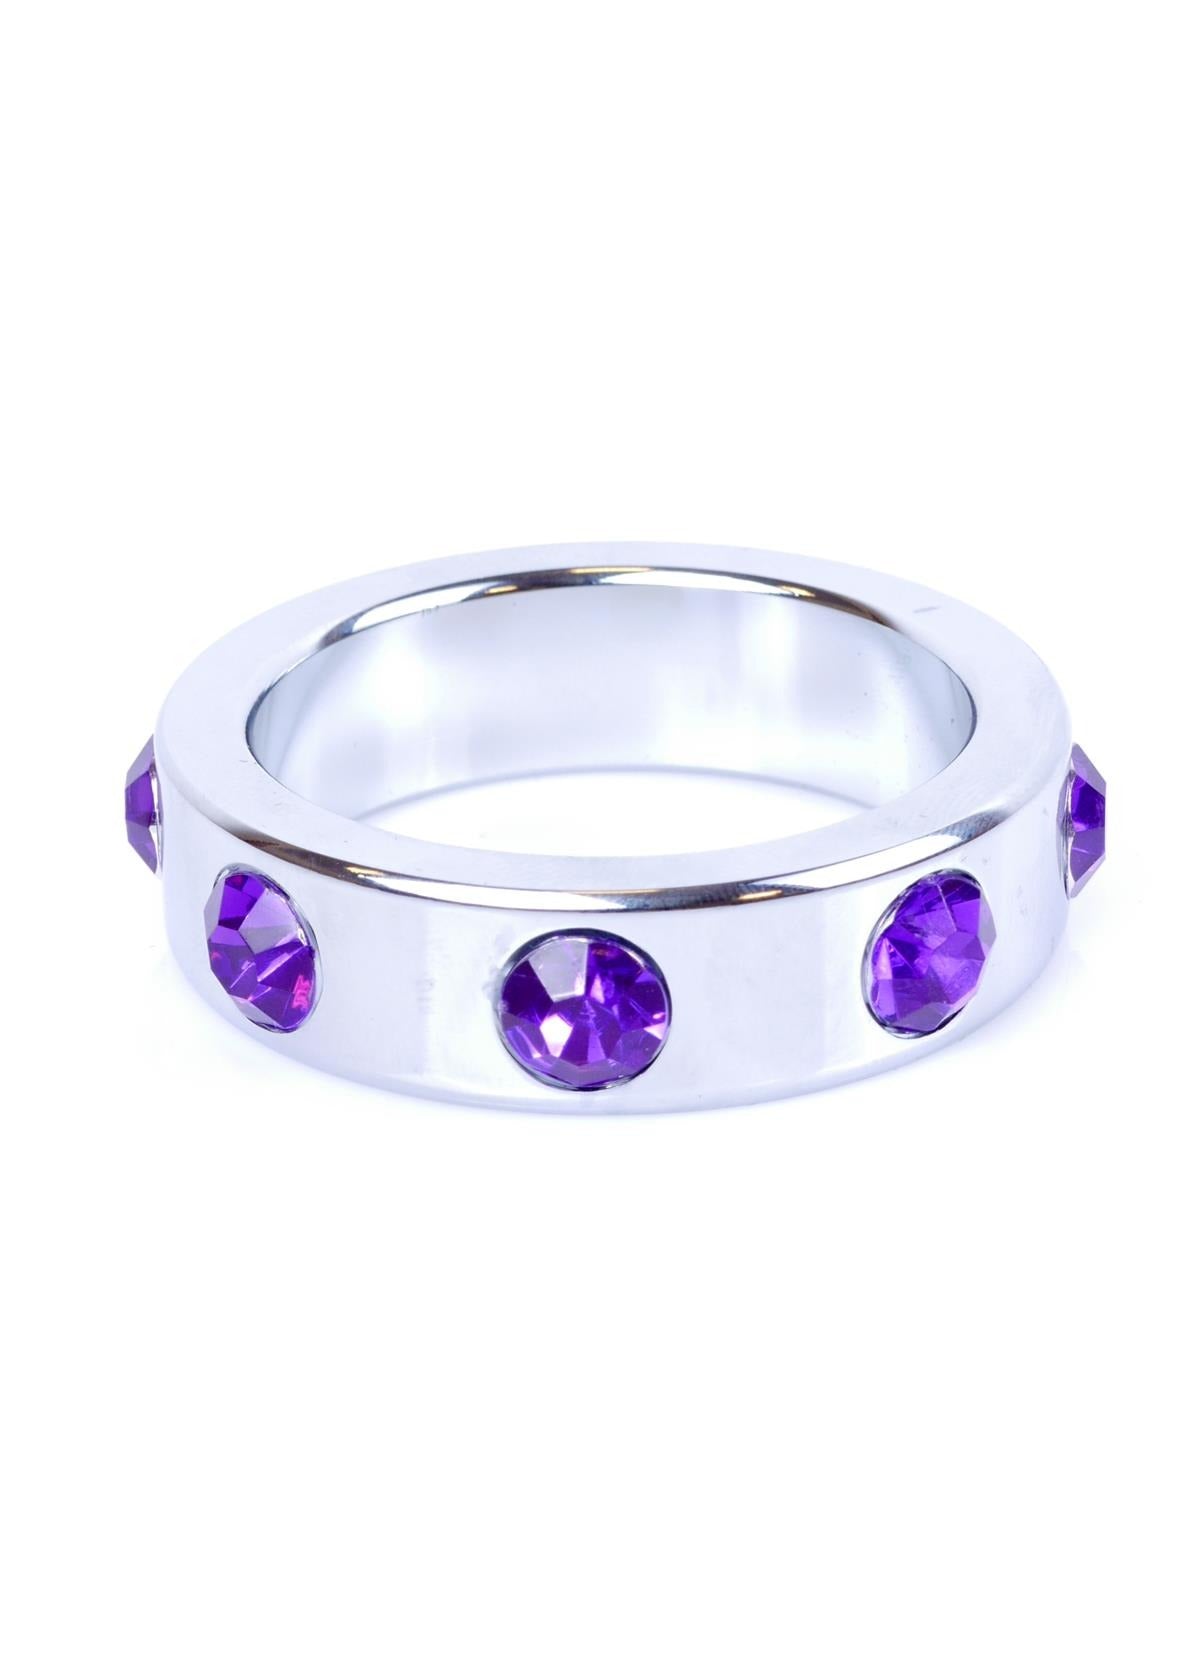 Bossoftoys - 64-00006 - Metal - Cockring  - Diamonds - Purple - Large